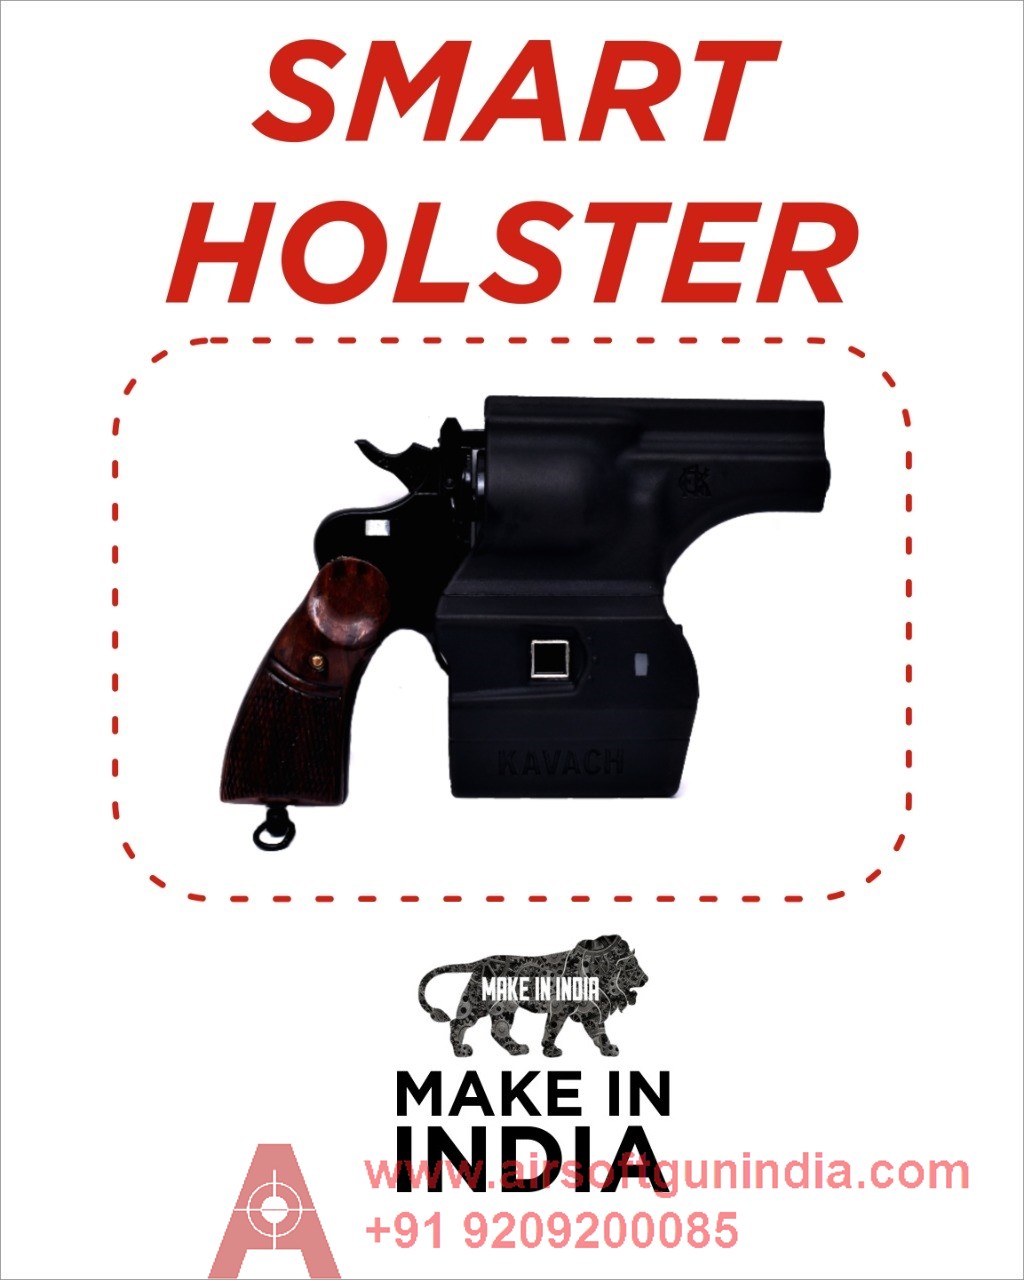 Kavach Smart holster Fingerprint Gun Holster in india for IOF .32 Revolver By Airsoft gun india